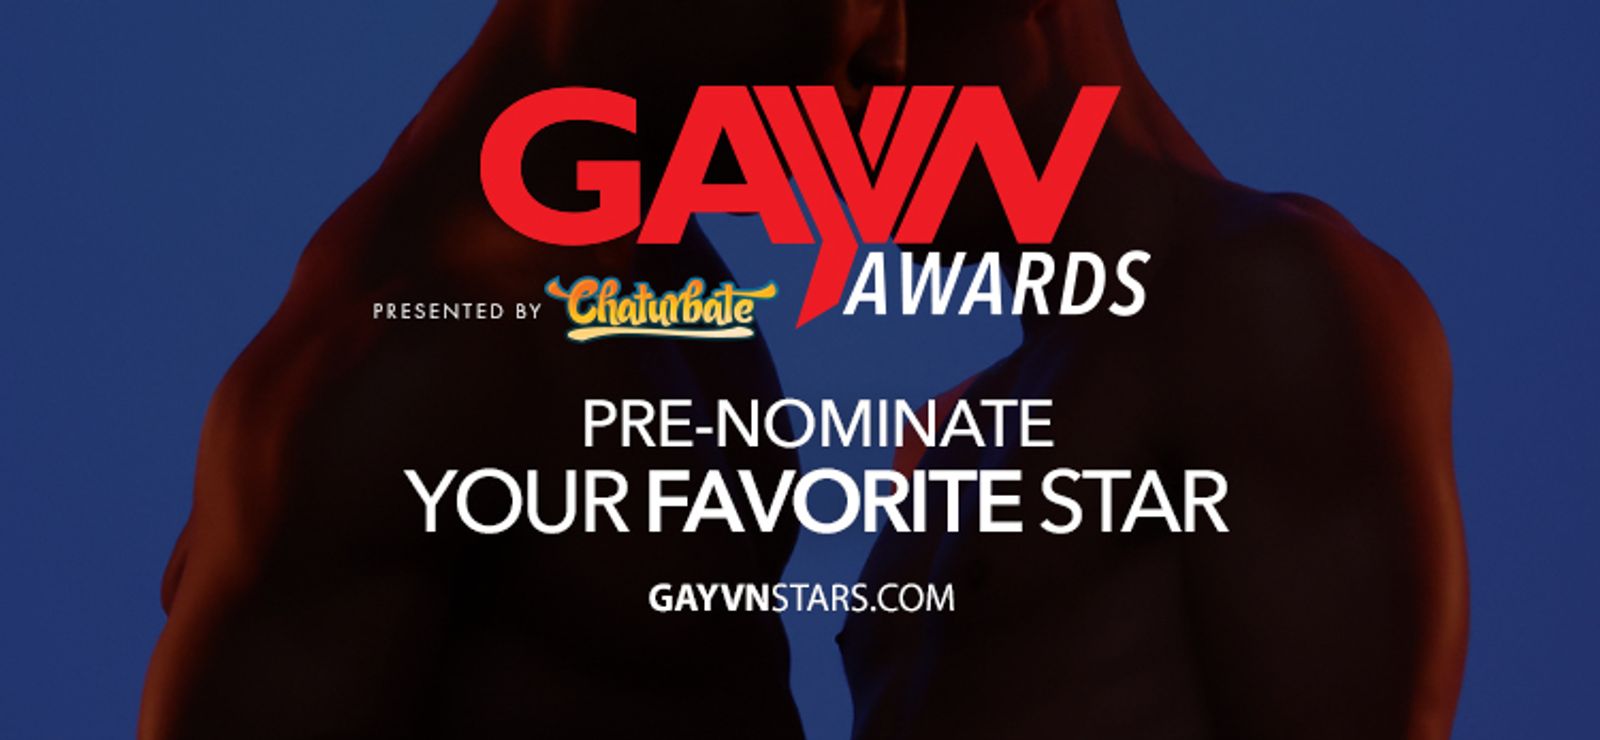 Pre-Nominations Open for Fan-Voted 2022 GayVN Awards